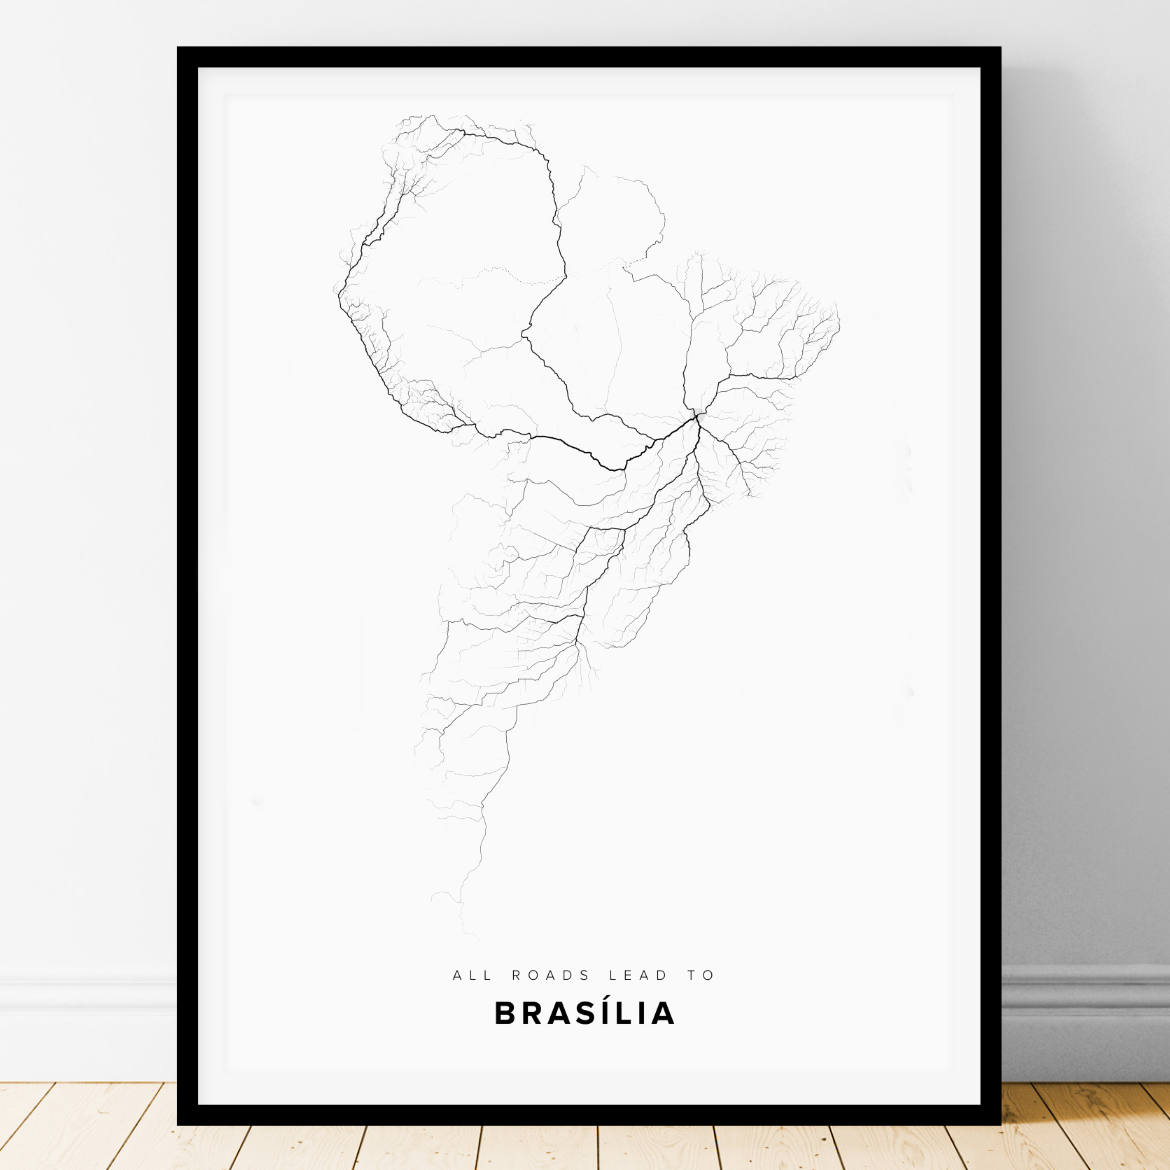 All roads lead to Brasília (Brazil) Fine Art Map Print